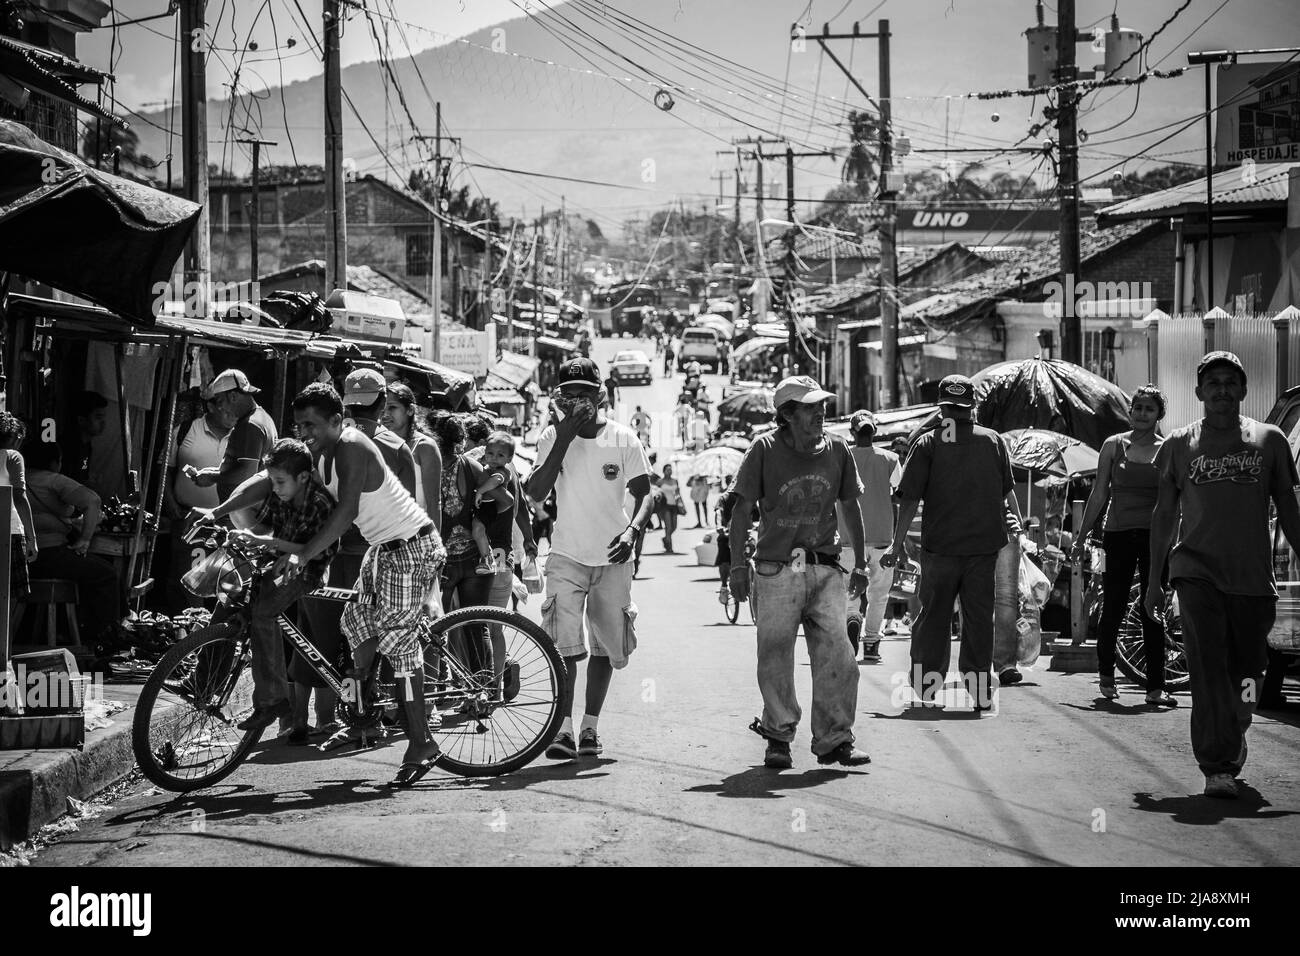 Busy street scene near the market in Granada, Nicaragua - black & white Stock Photo